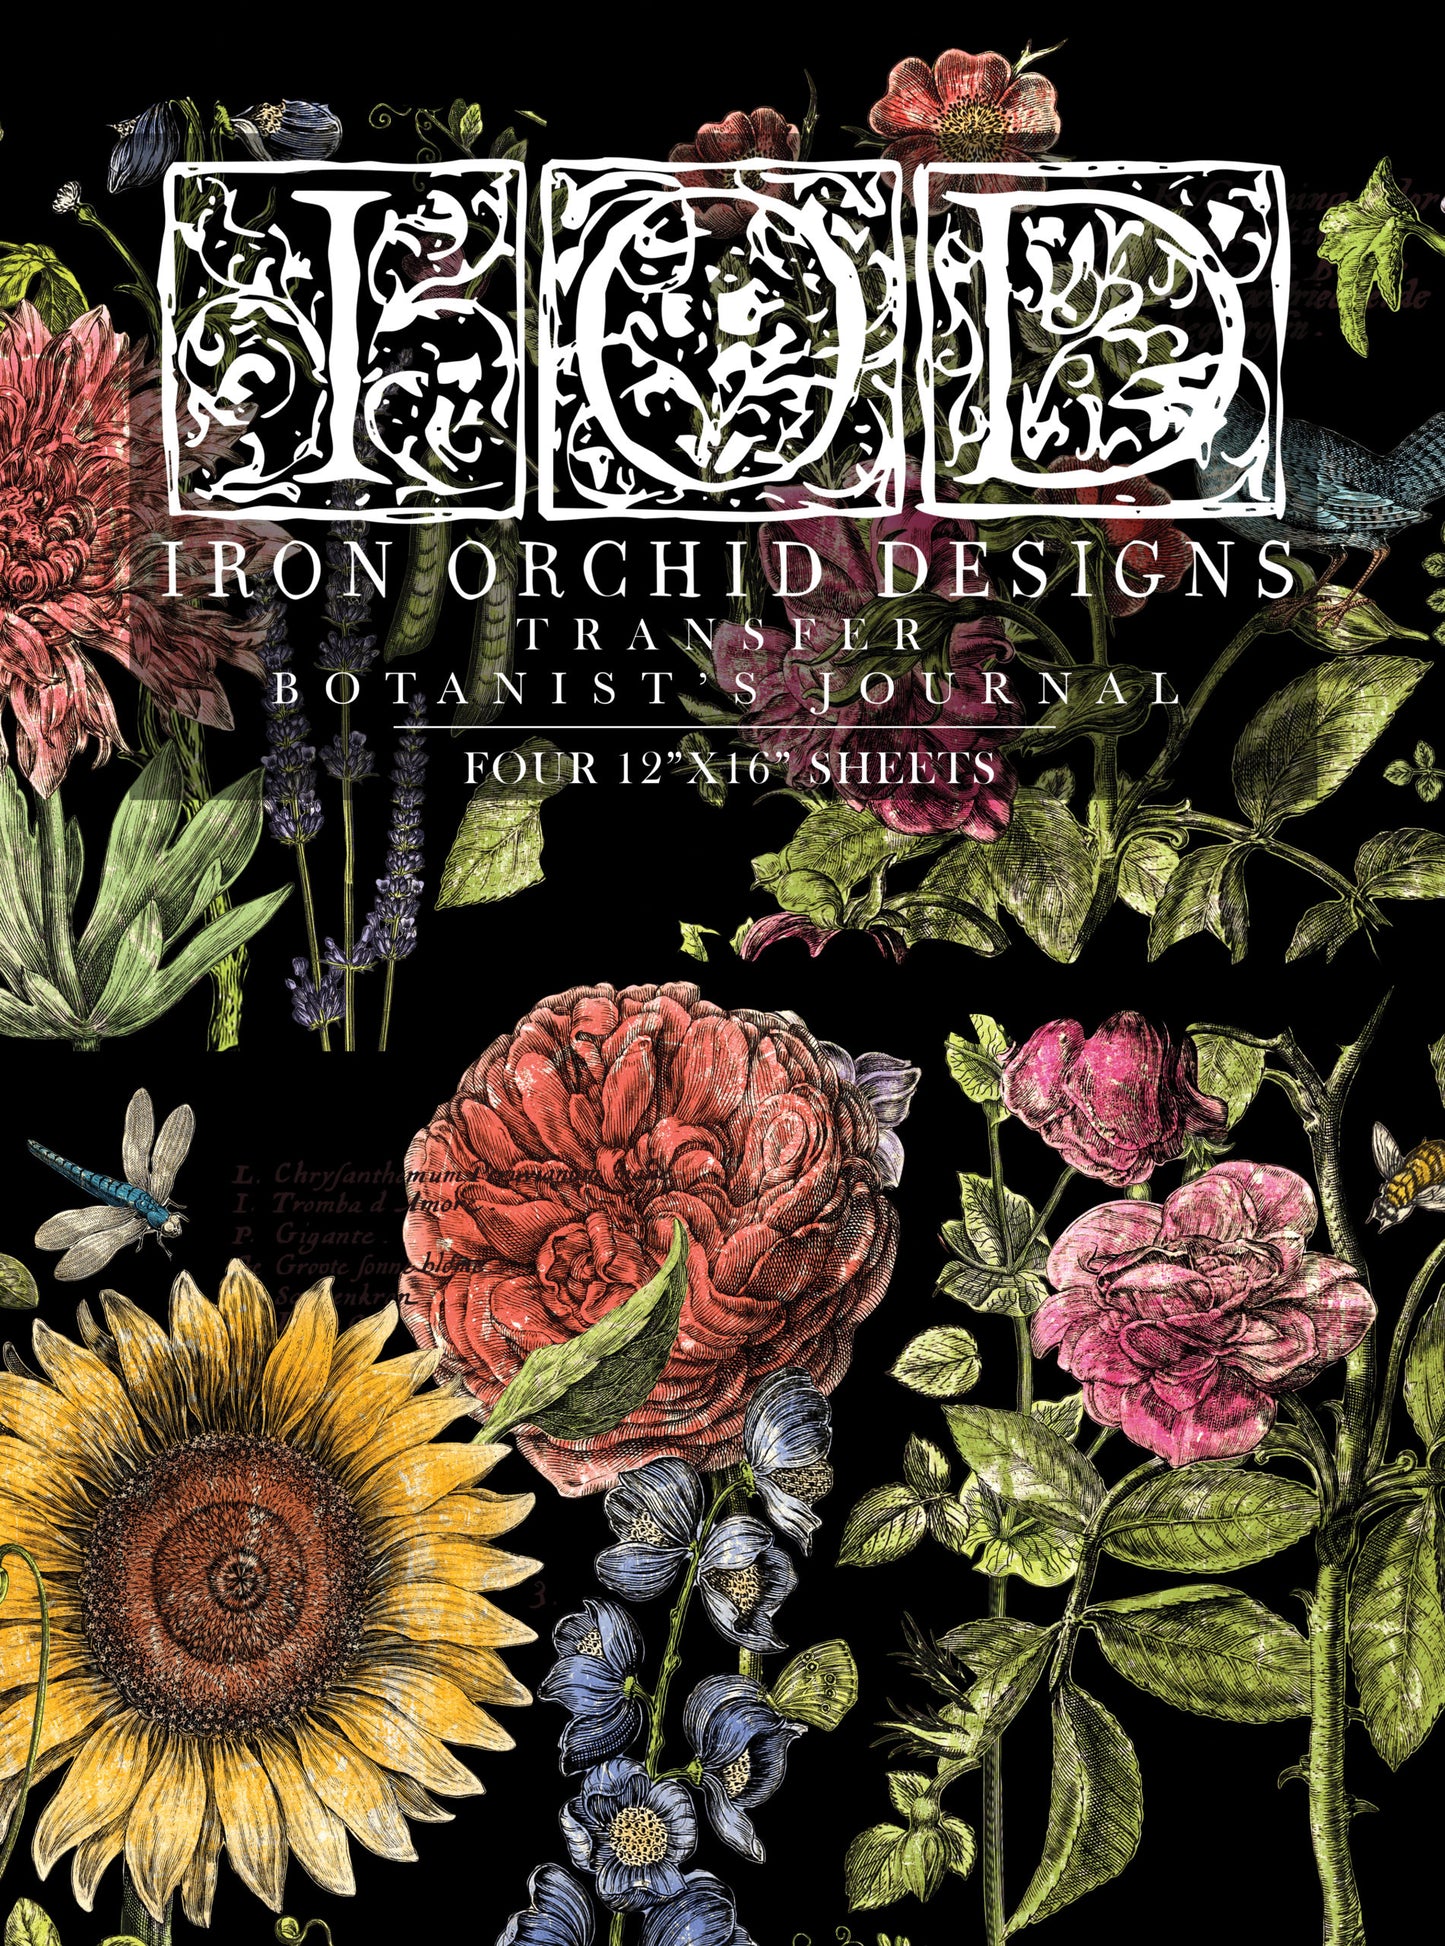 Iron Orchid Designs Botanist’s Journal | IOD Transfer